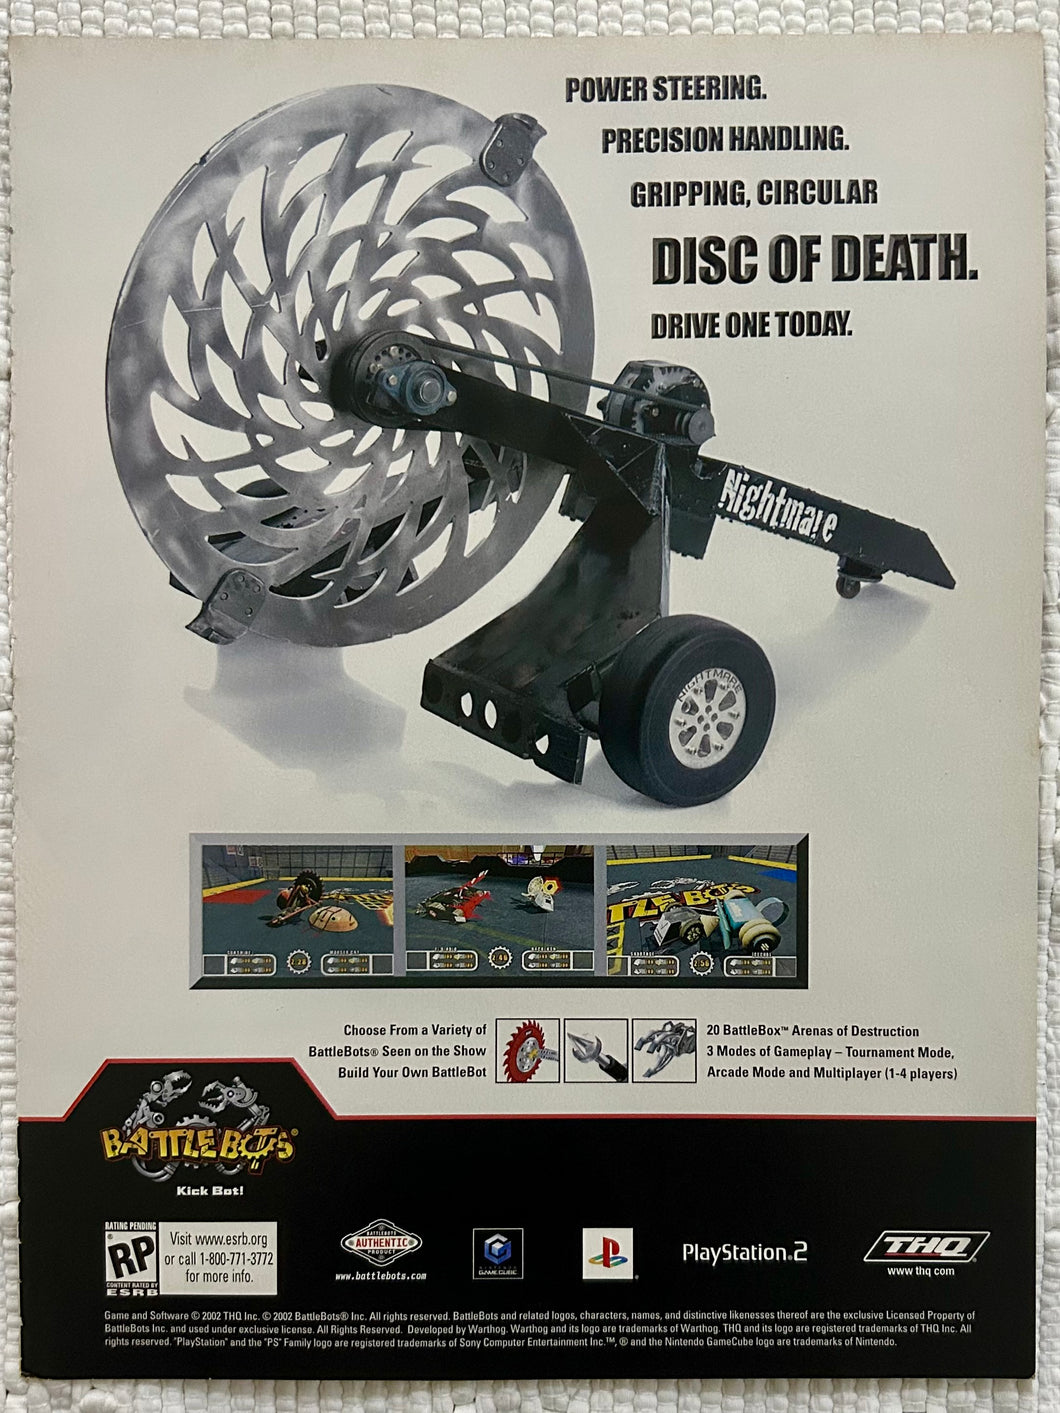 BattleBots - PS2 NGC - Original Vintage Advertisement - Print Ads - Laminated A4 Poster